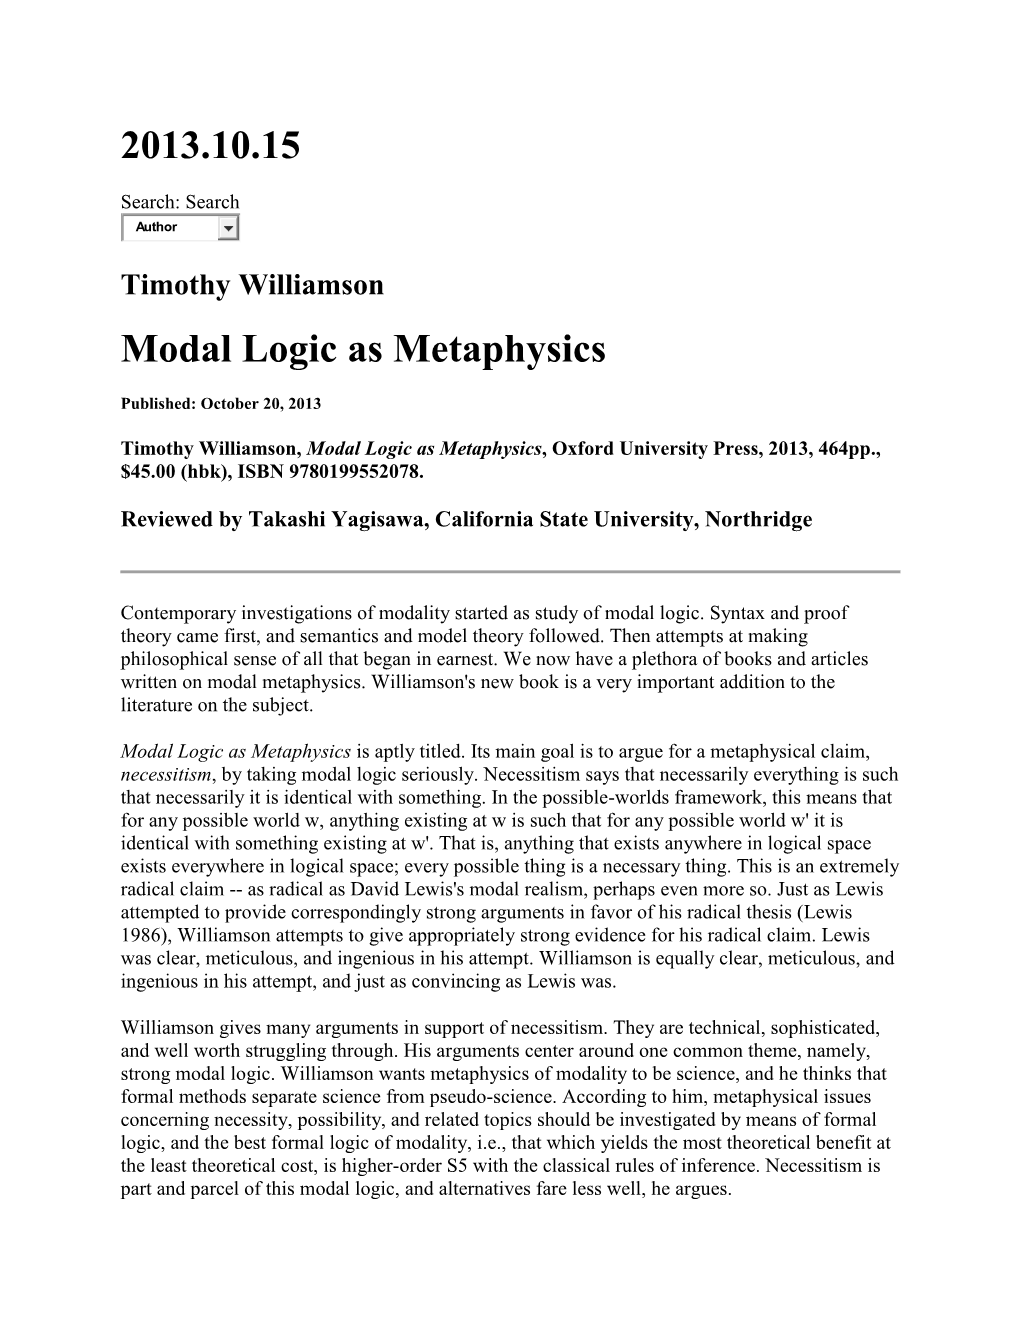 2013.10.15 Modal Logic As Metaphysics